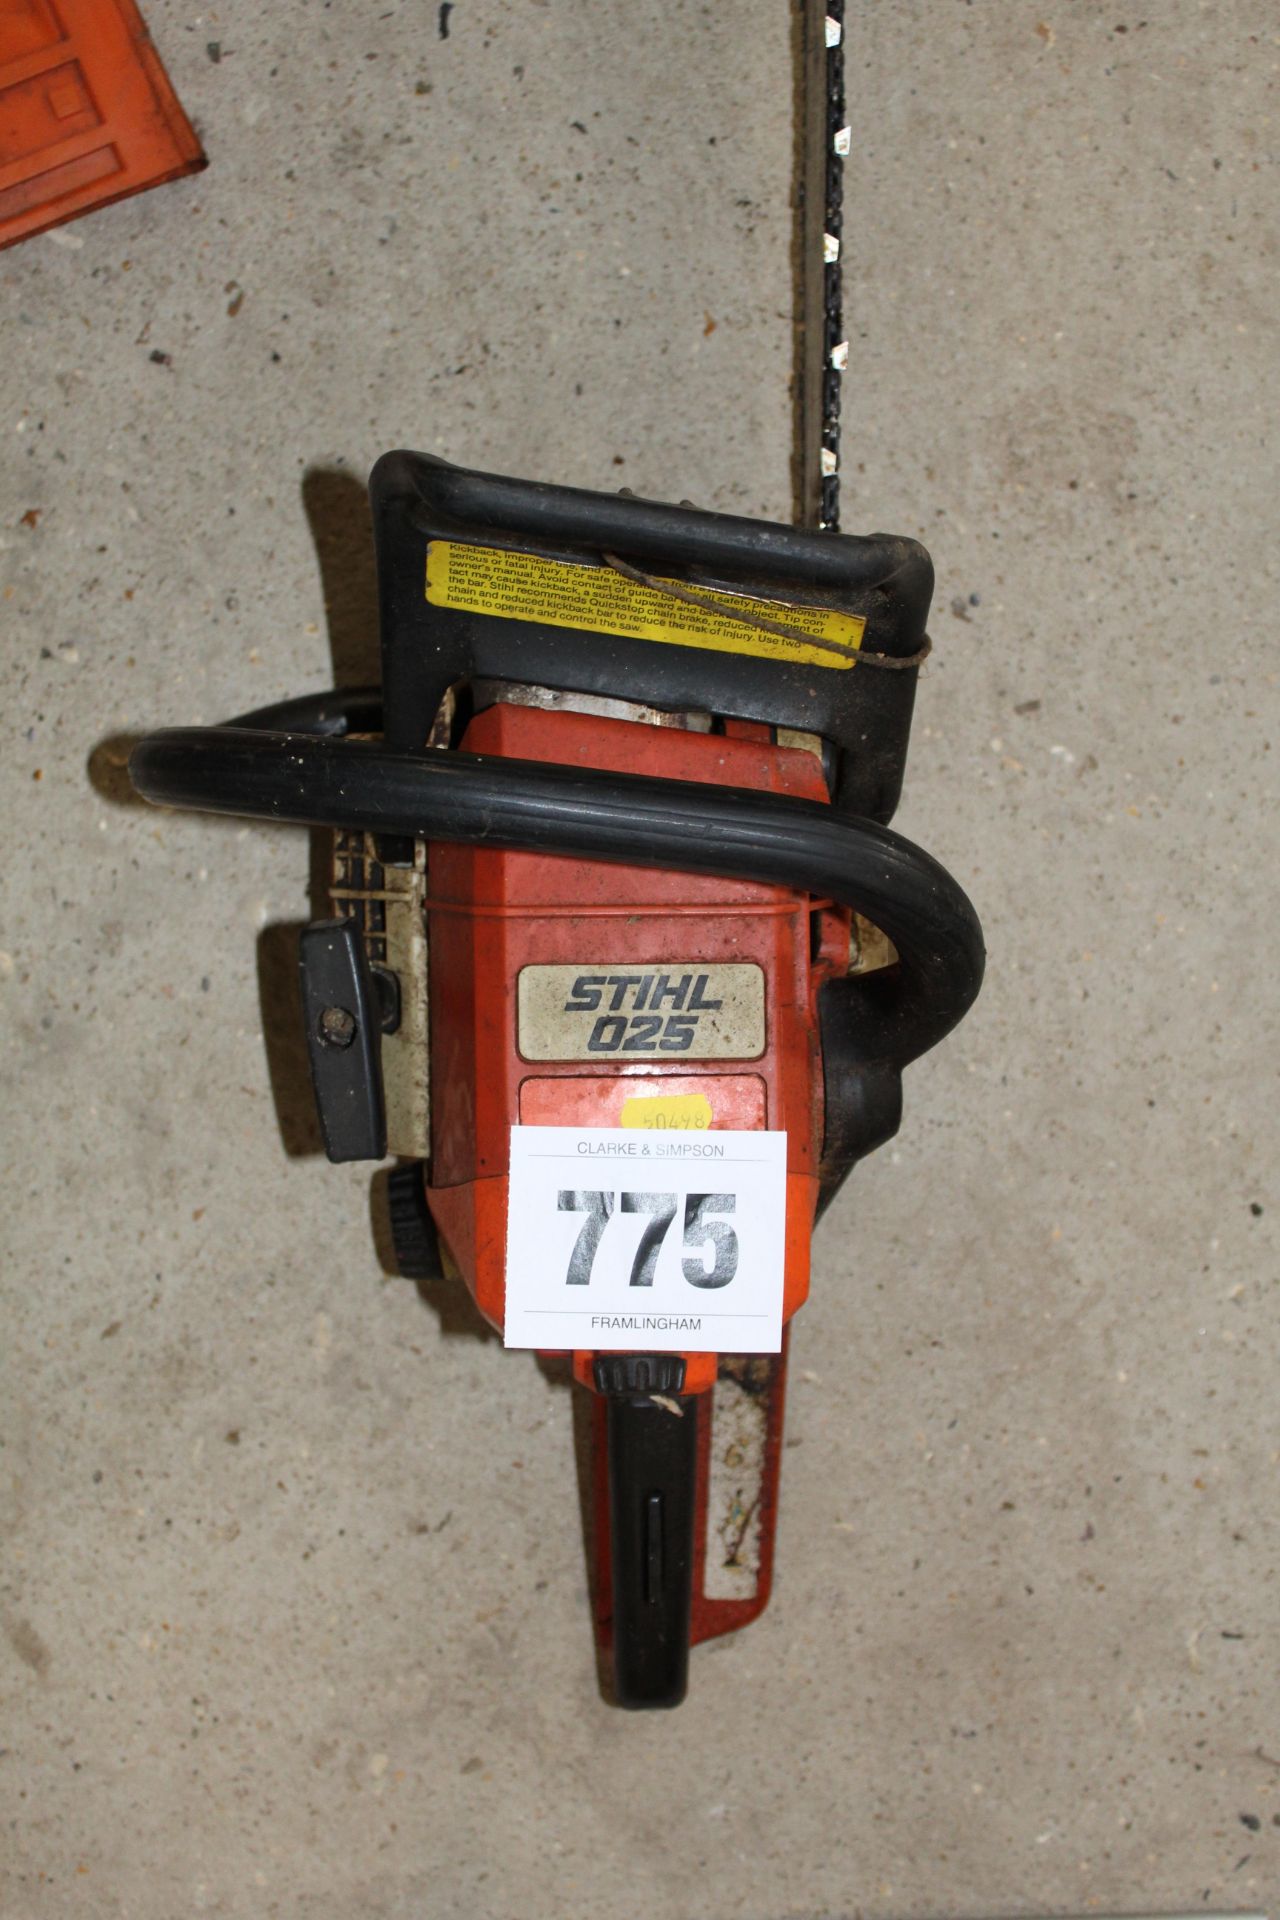 Stihl 025 petrol chainsaw. - Image 6 of 6